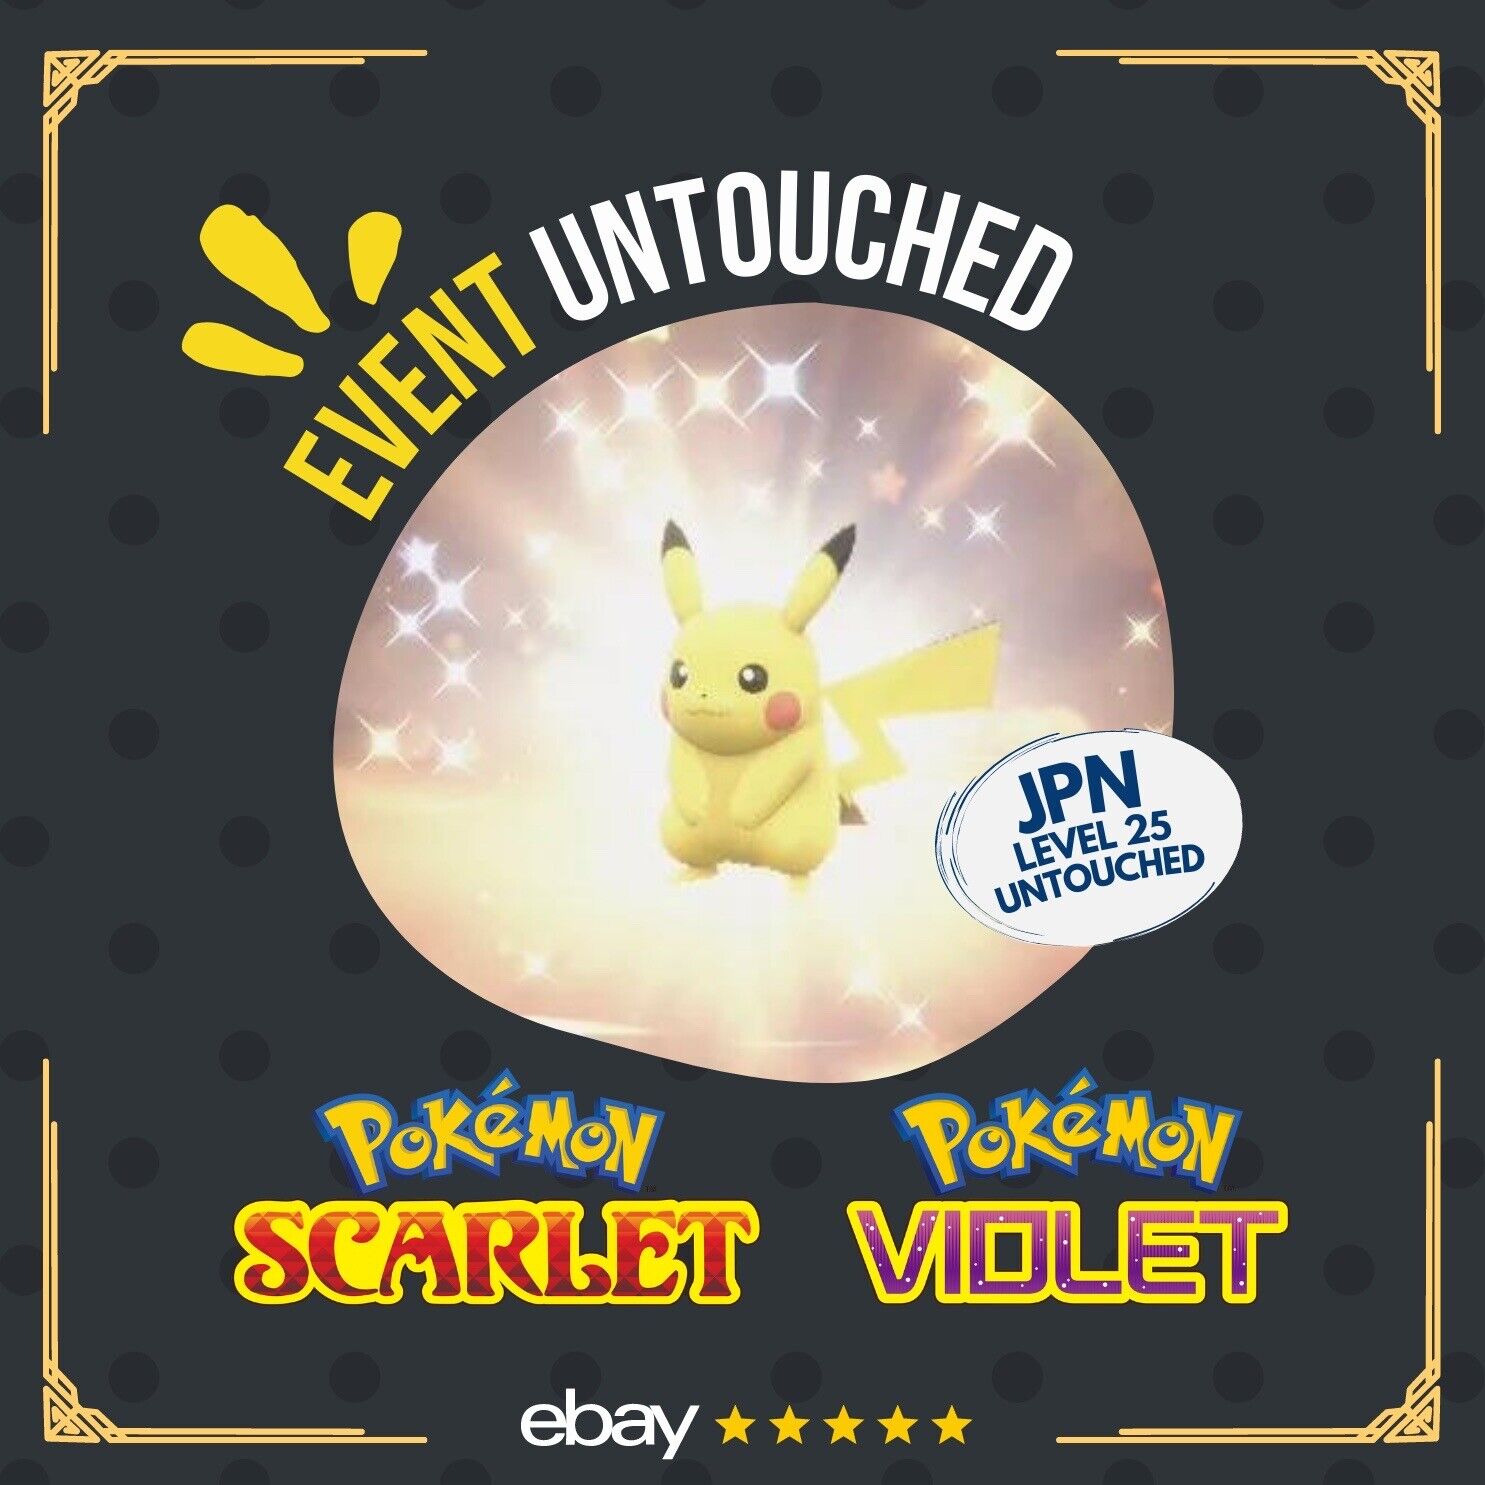 Pikachu Event 25 years Center JPN Mini or Jumbo Untouched Pokémon Scarlet Violet by Shiny Living Dex | Shiny Living Dex